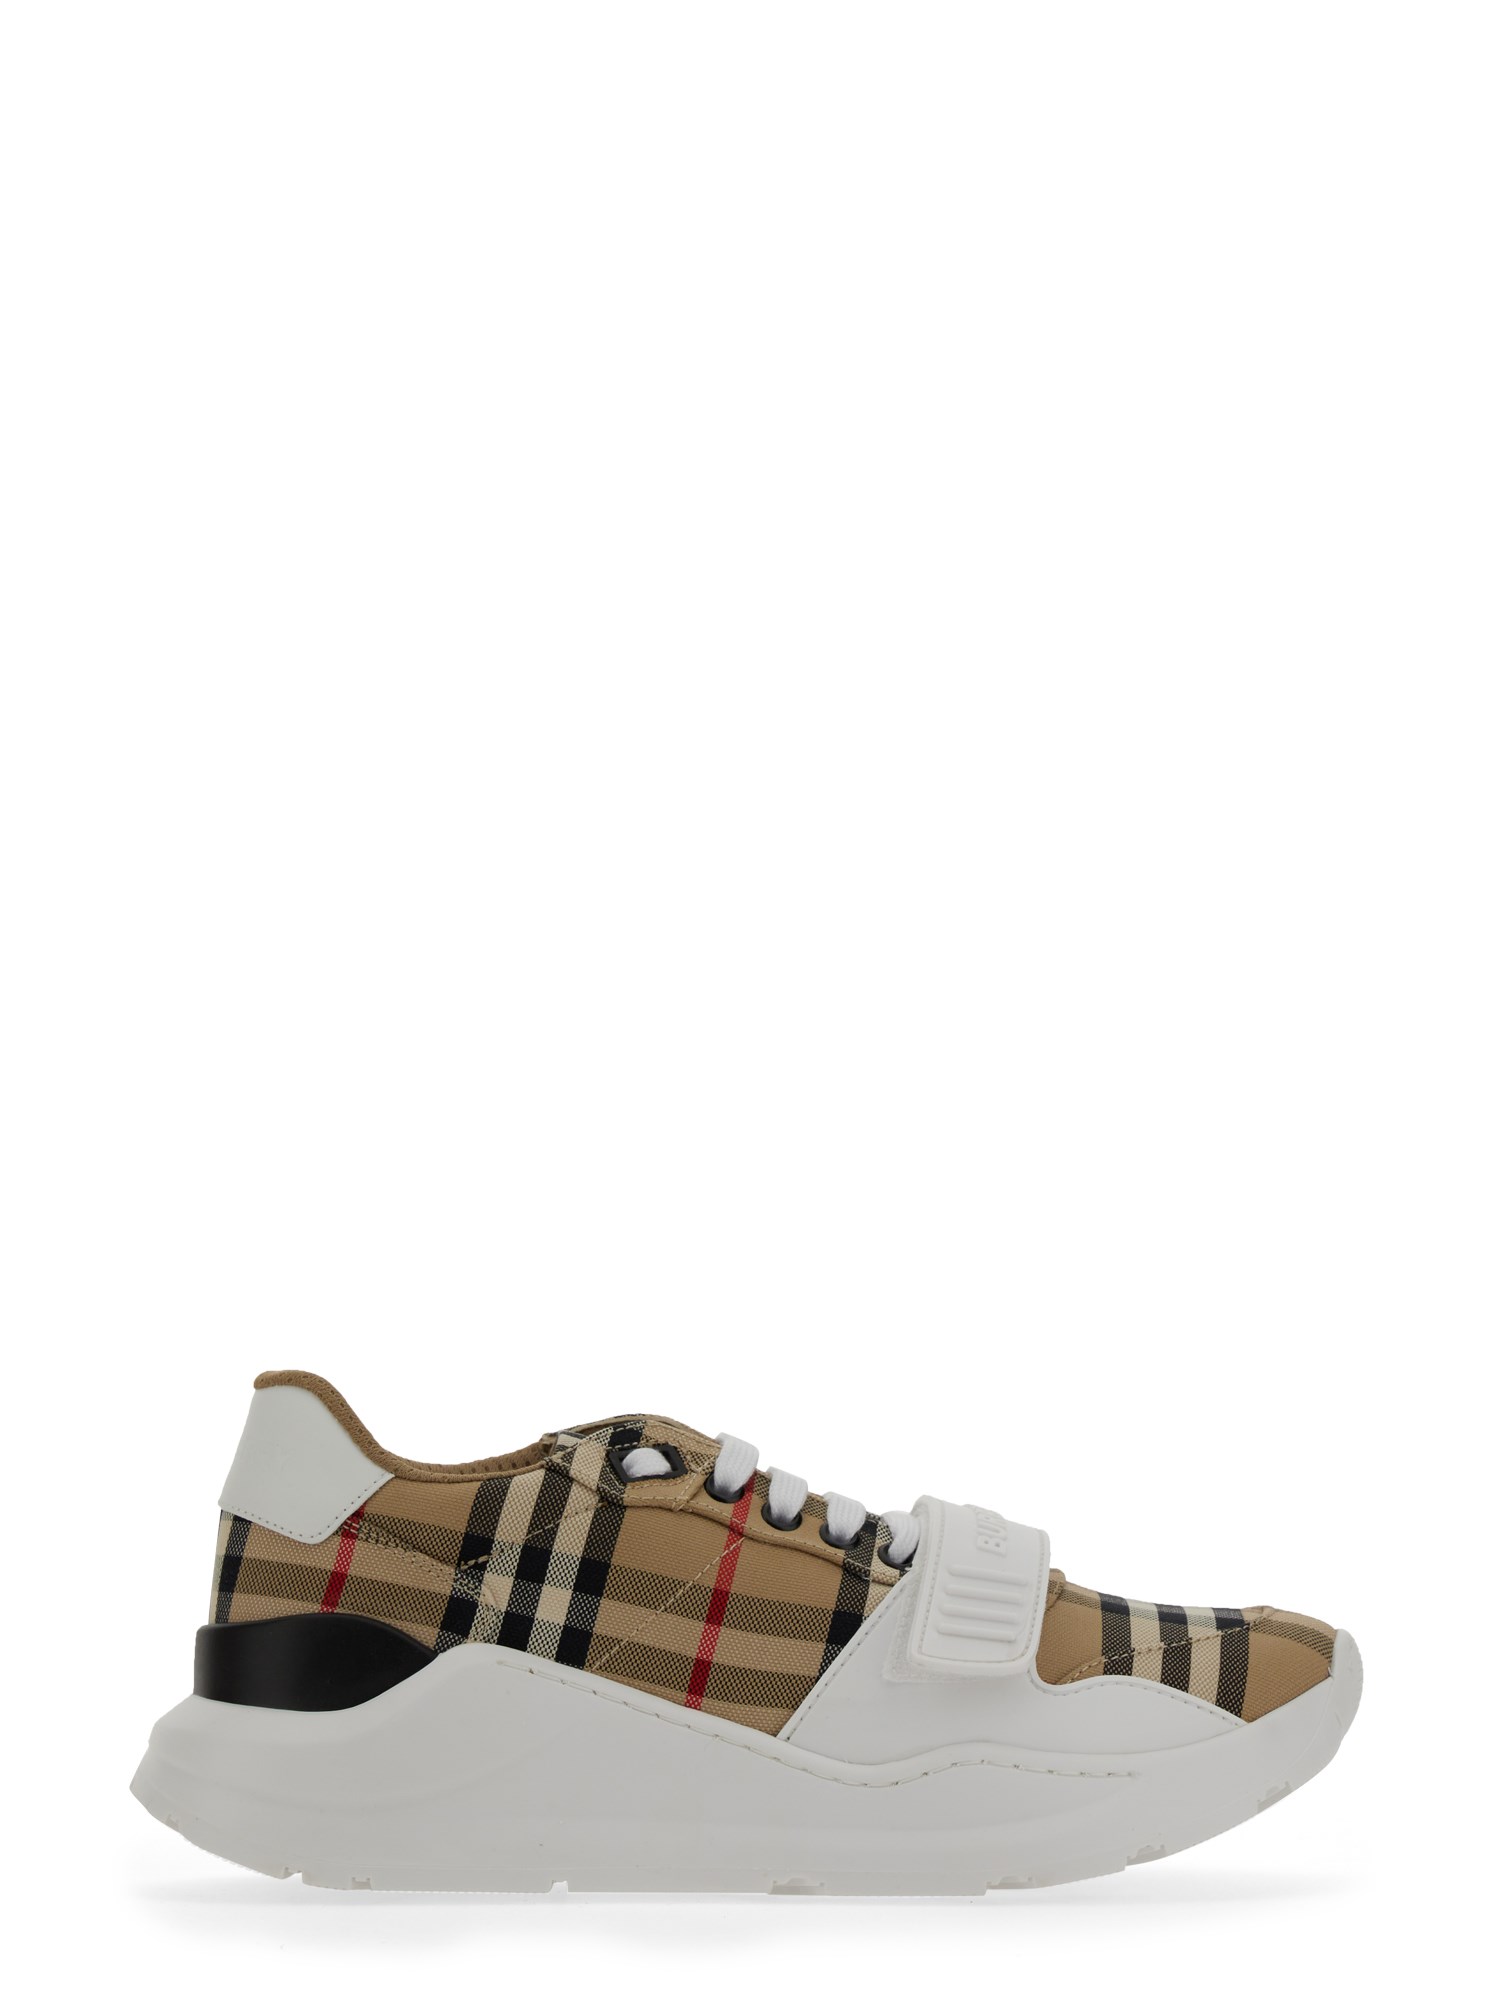 burberry vintage check pattern sneaker